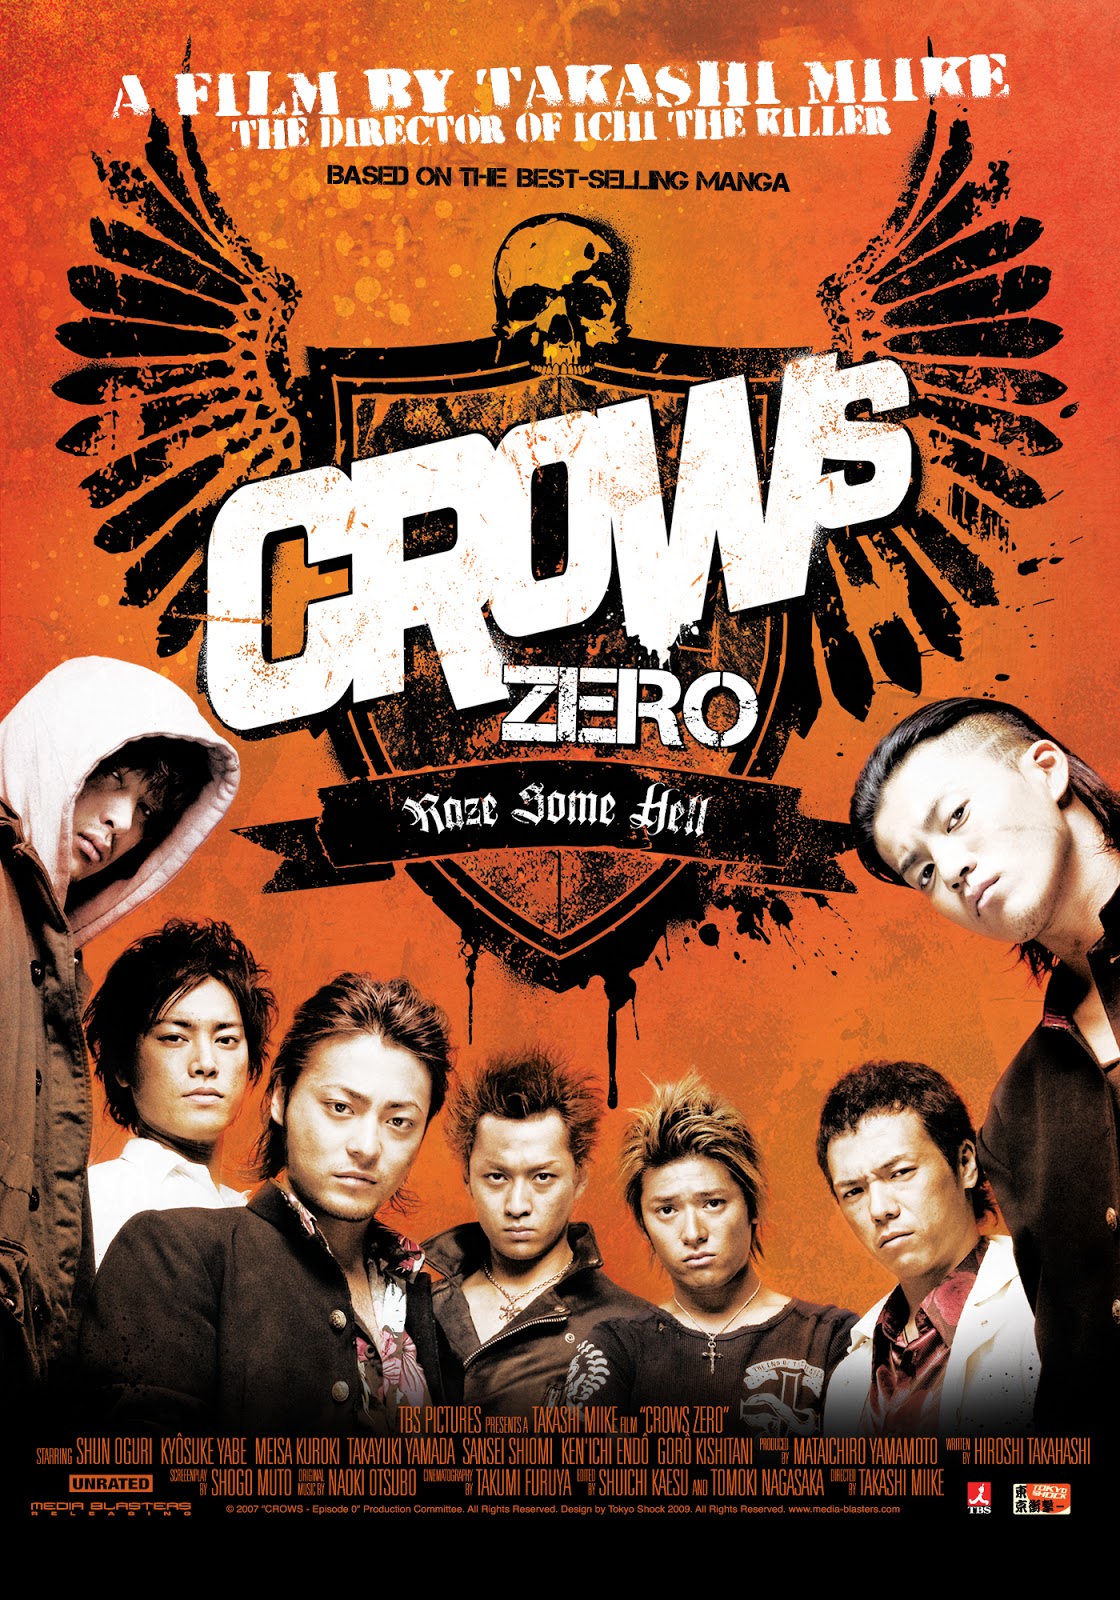 download video crows zero 4